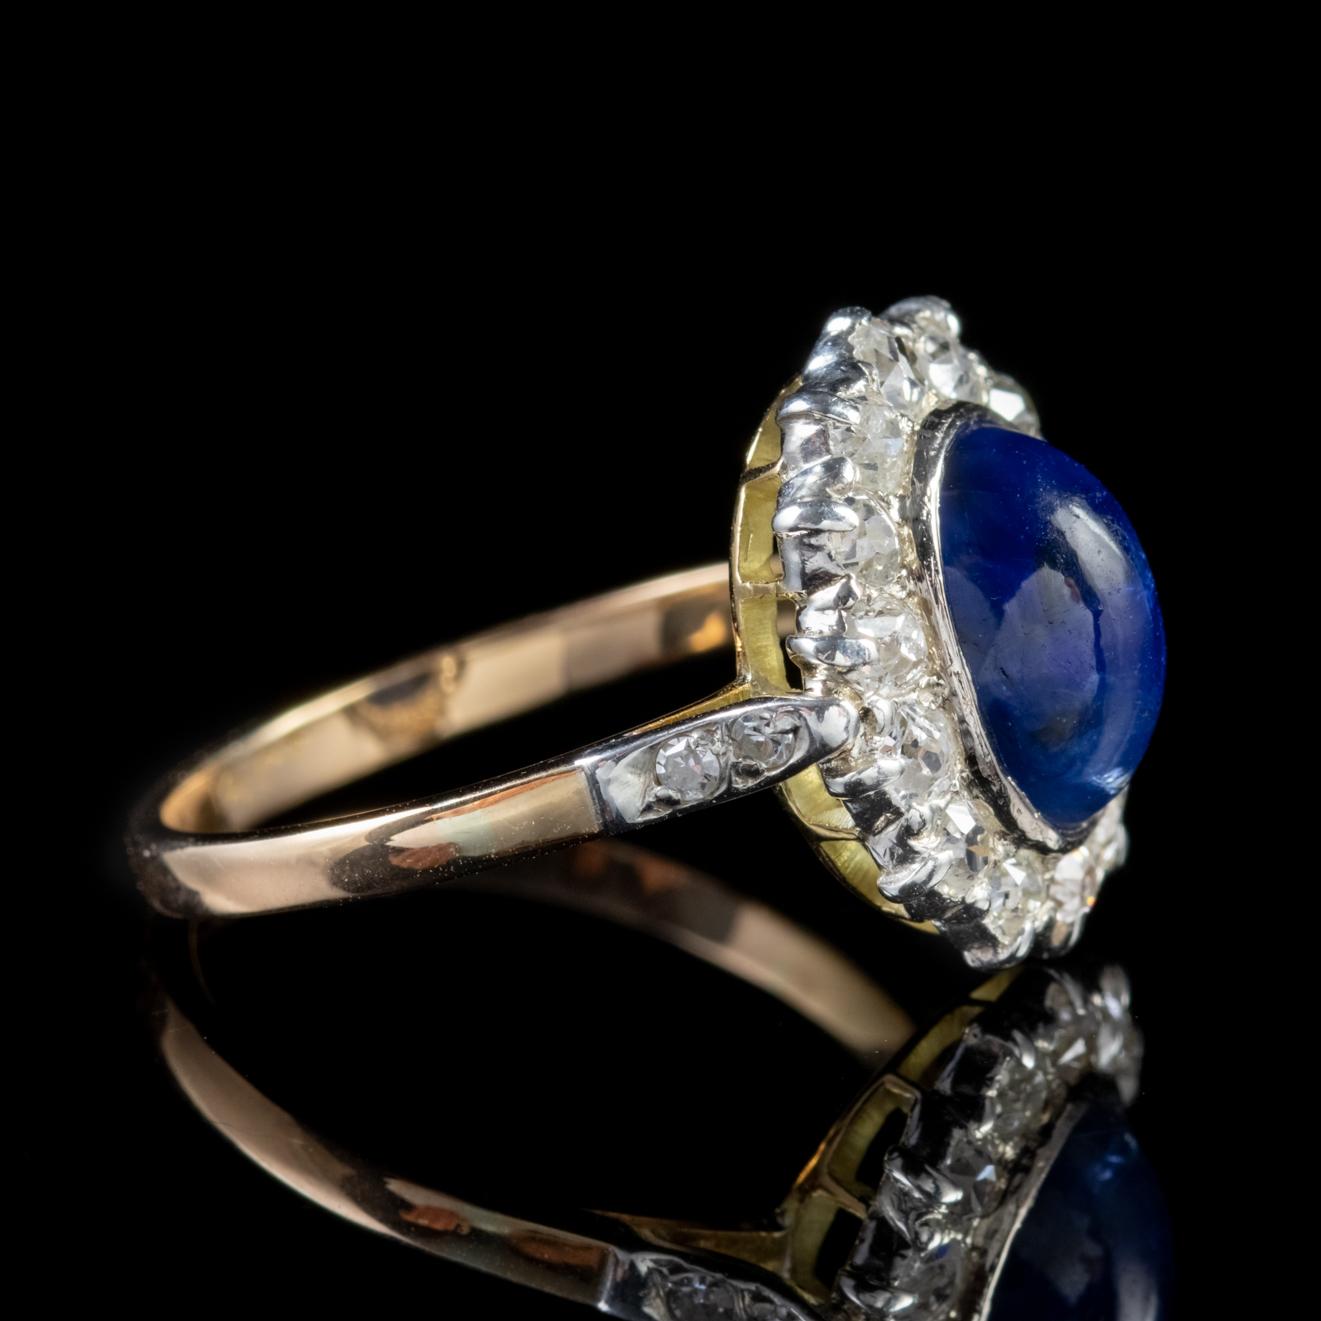 Antique Victorian Cabochon Sapphire Diamond Ring 18 Carat Gold, circa 1880 For Sale 1